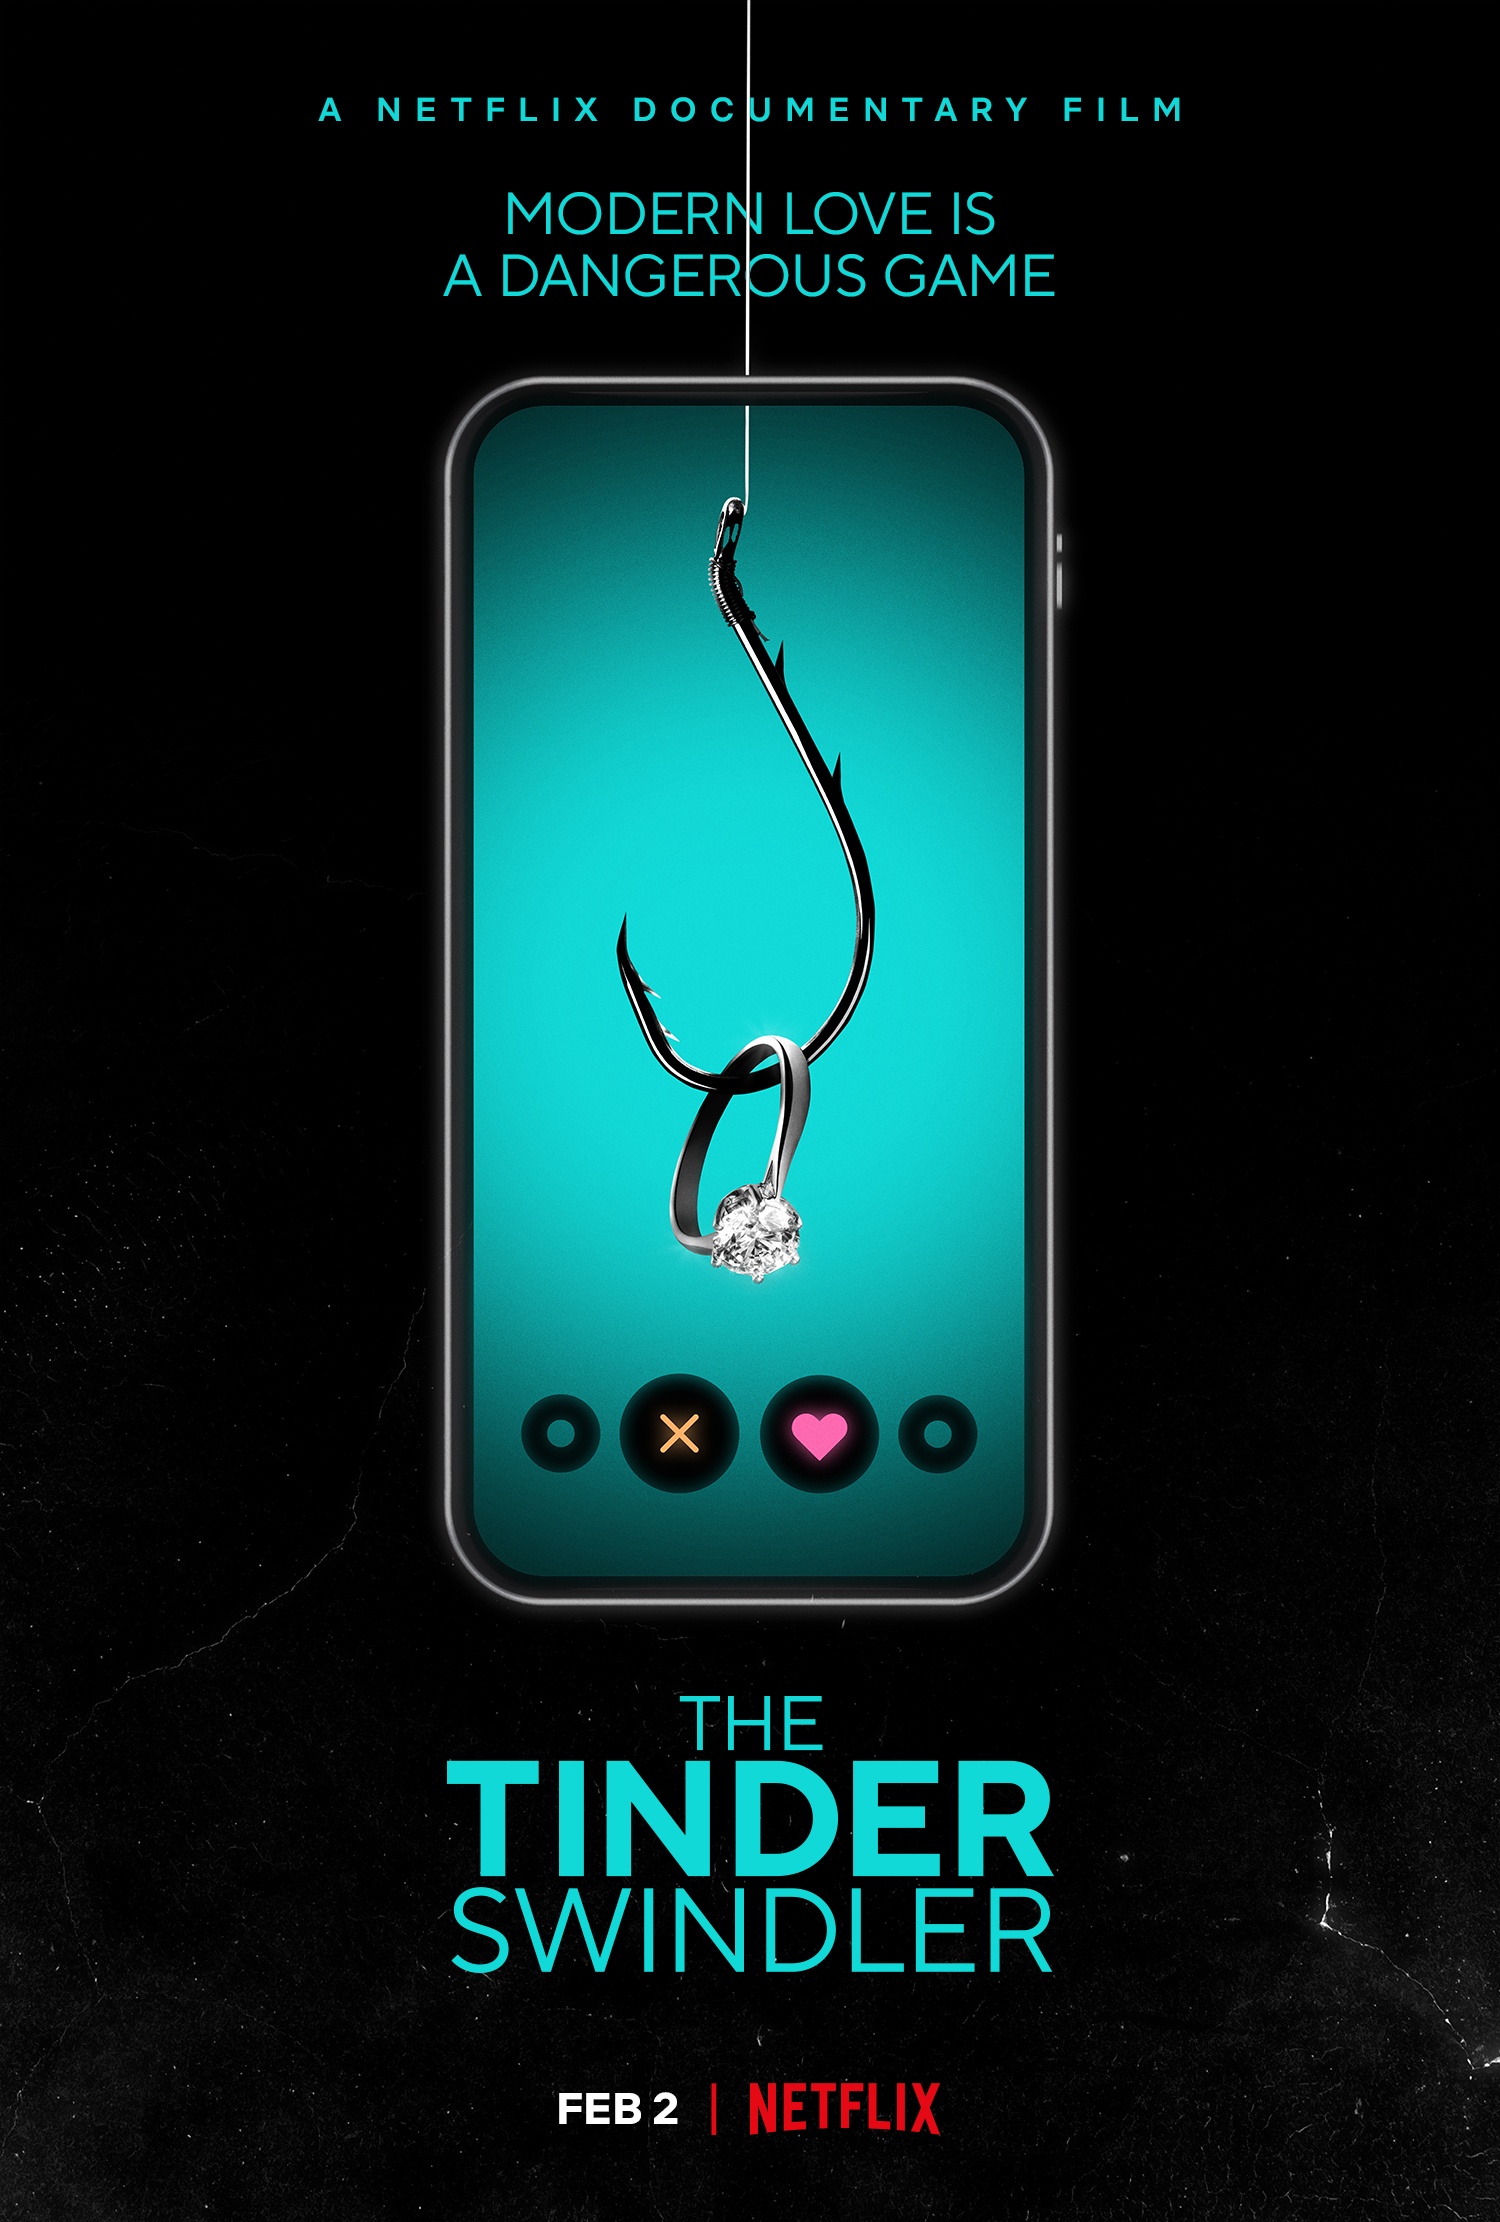 New Documentary: Netflix’s ‘The Tinder Swindler’